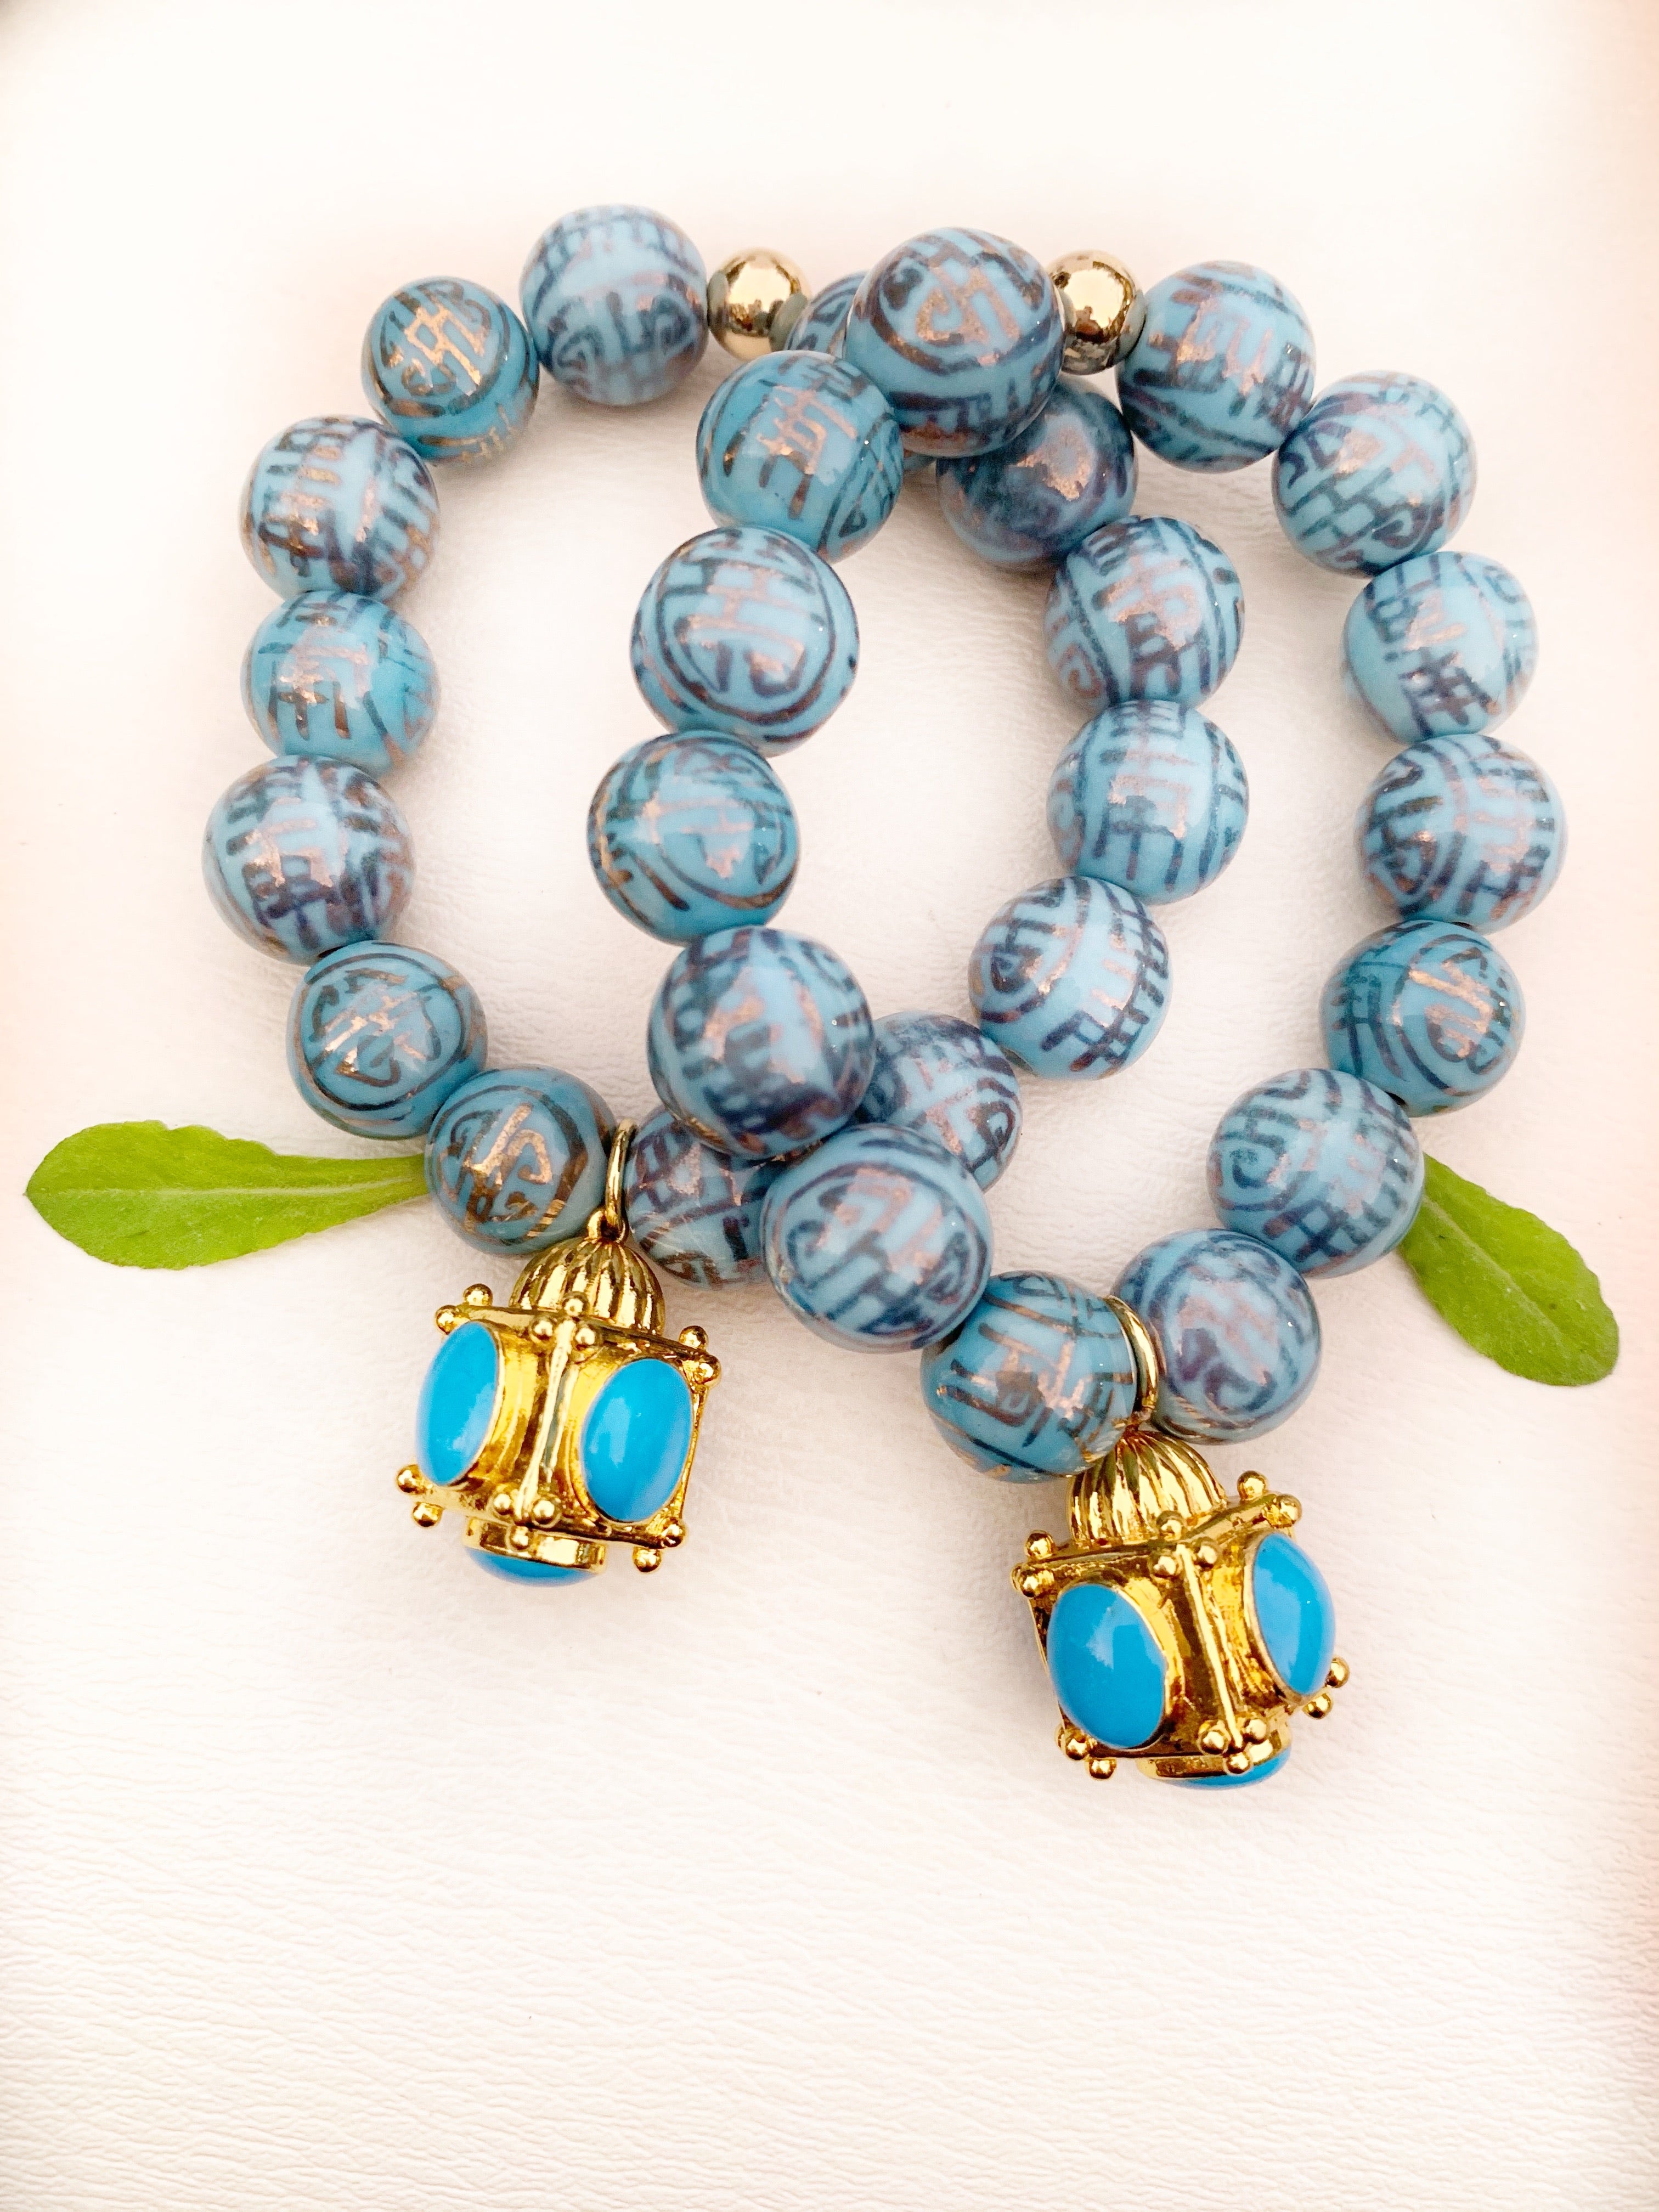 Light of the World lantern charm bracelet - Luxe beads ( gold paint longevity symbol)